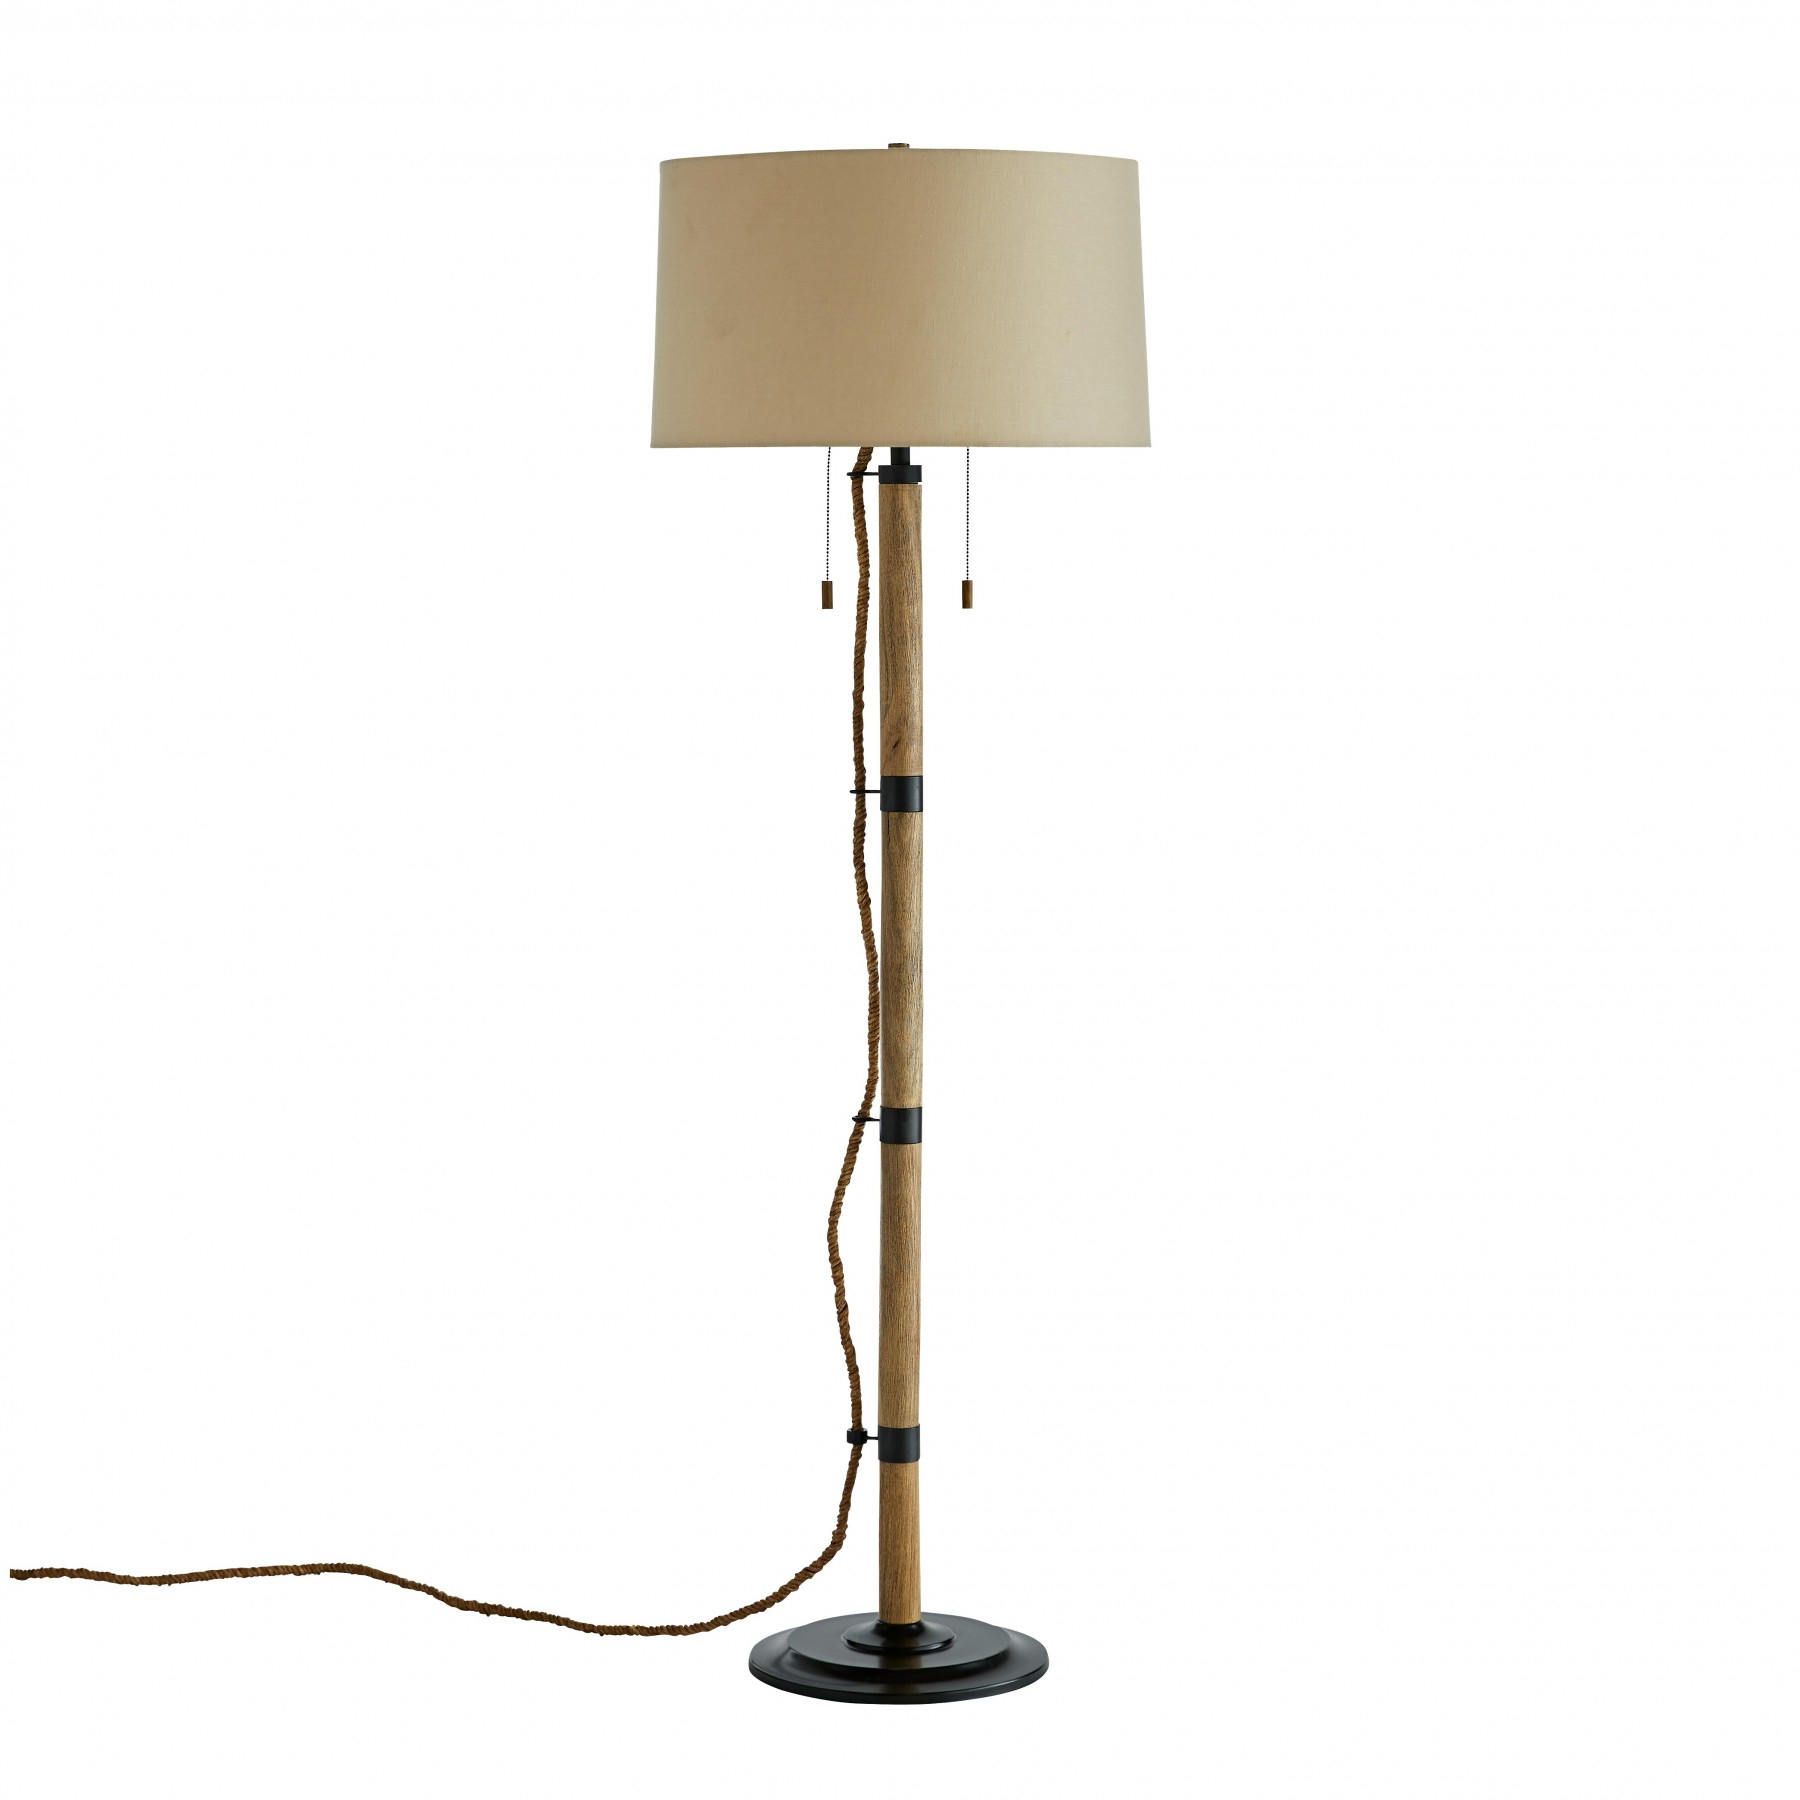 Vik Floor Lamp pertaining to size 1800 X 1800